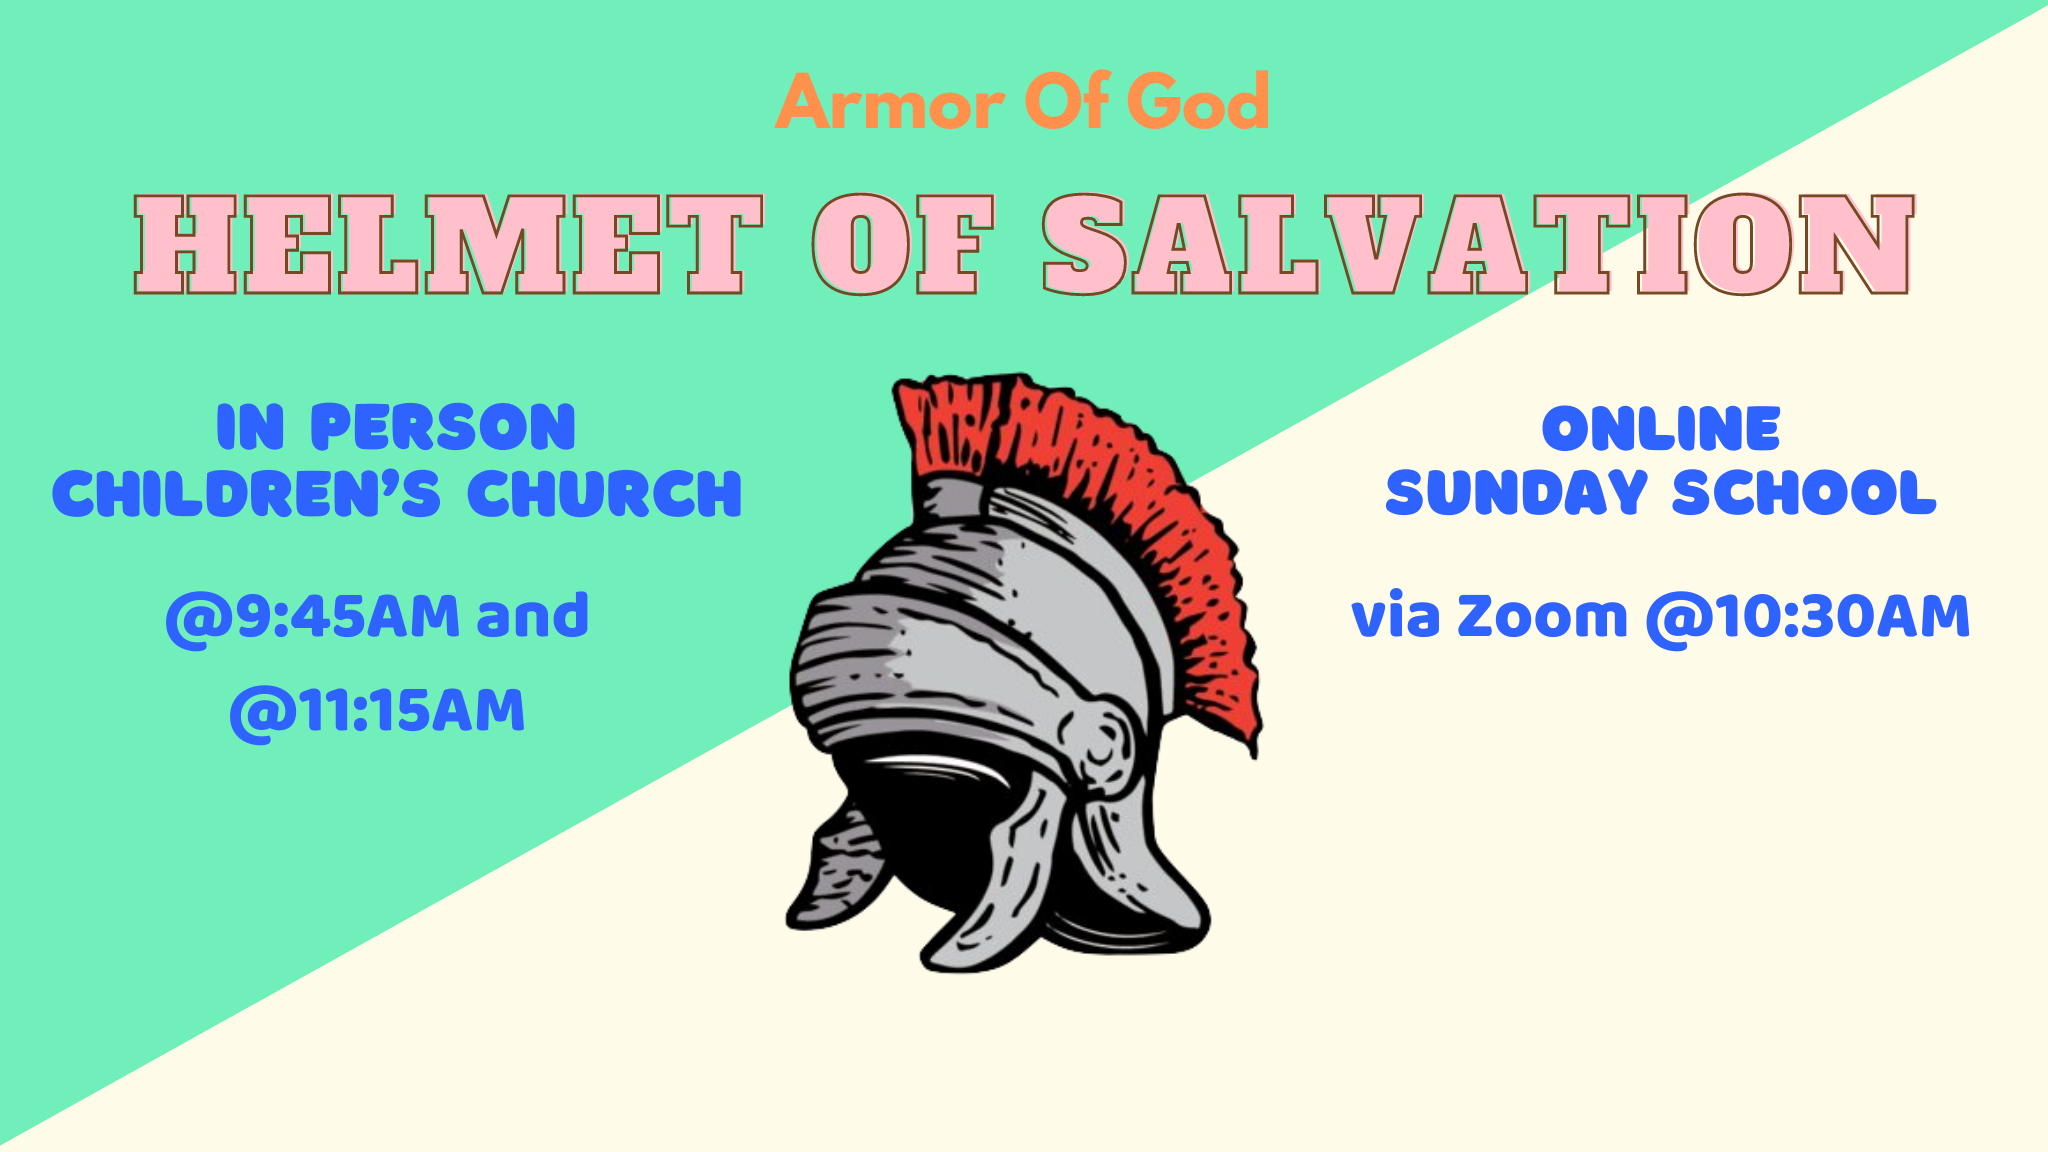 Armor of God - Helmet of Salvation